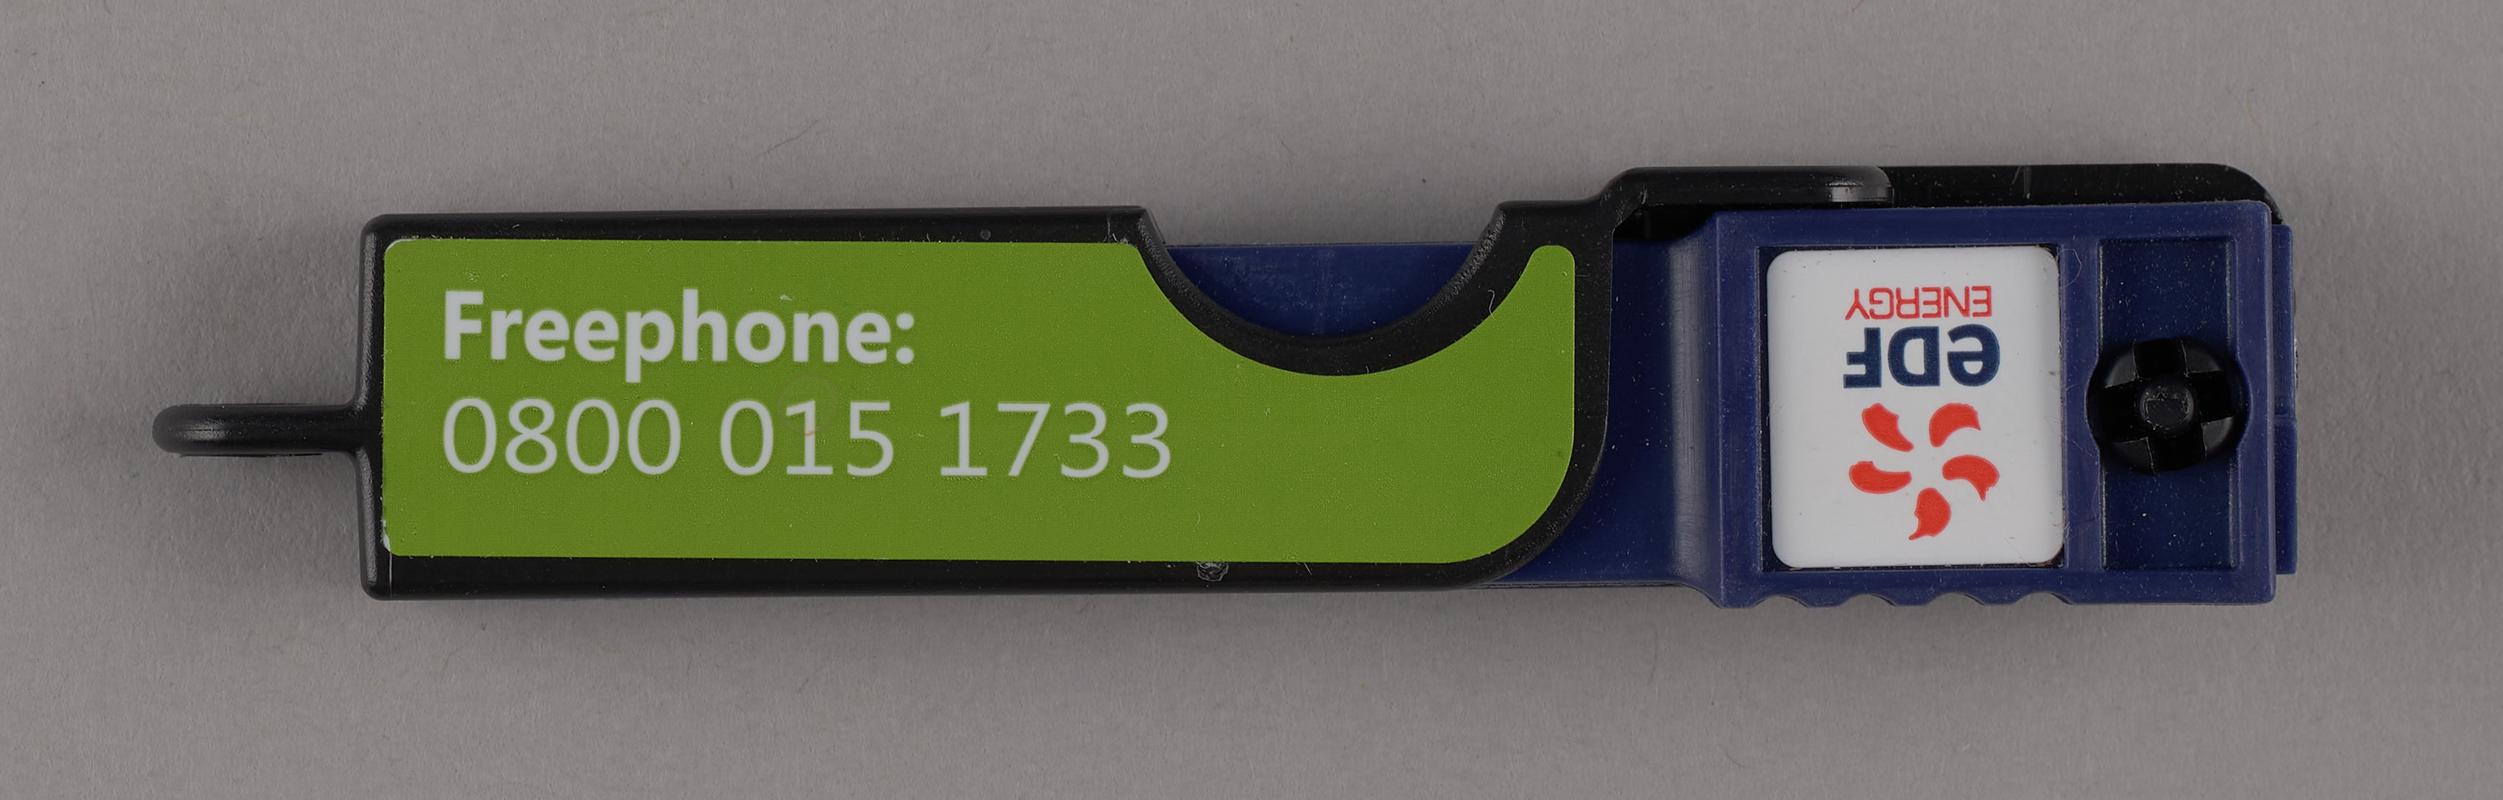 used ovo prepayment energy meter key